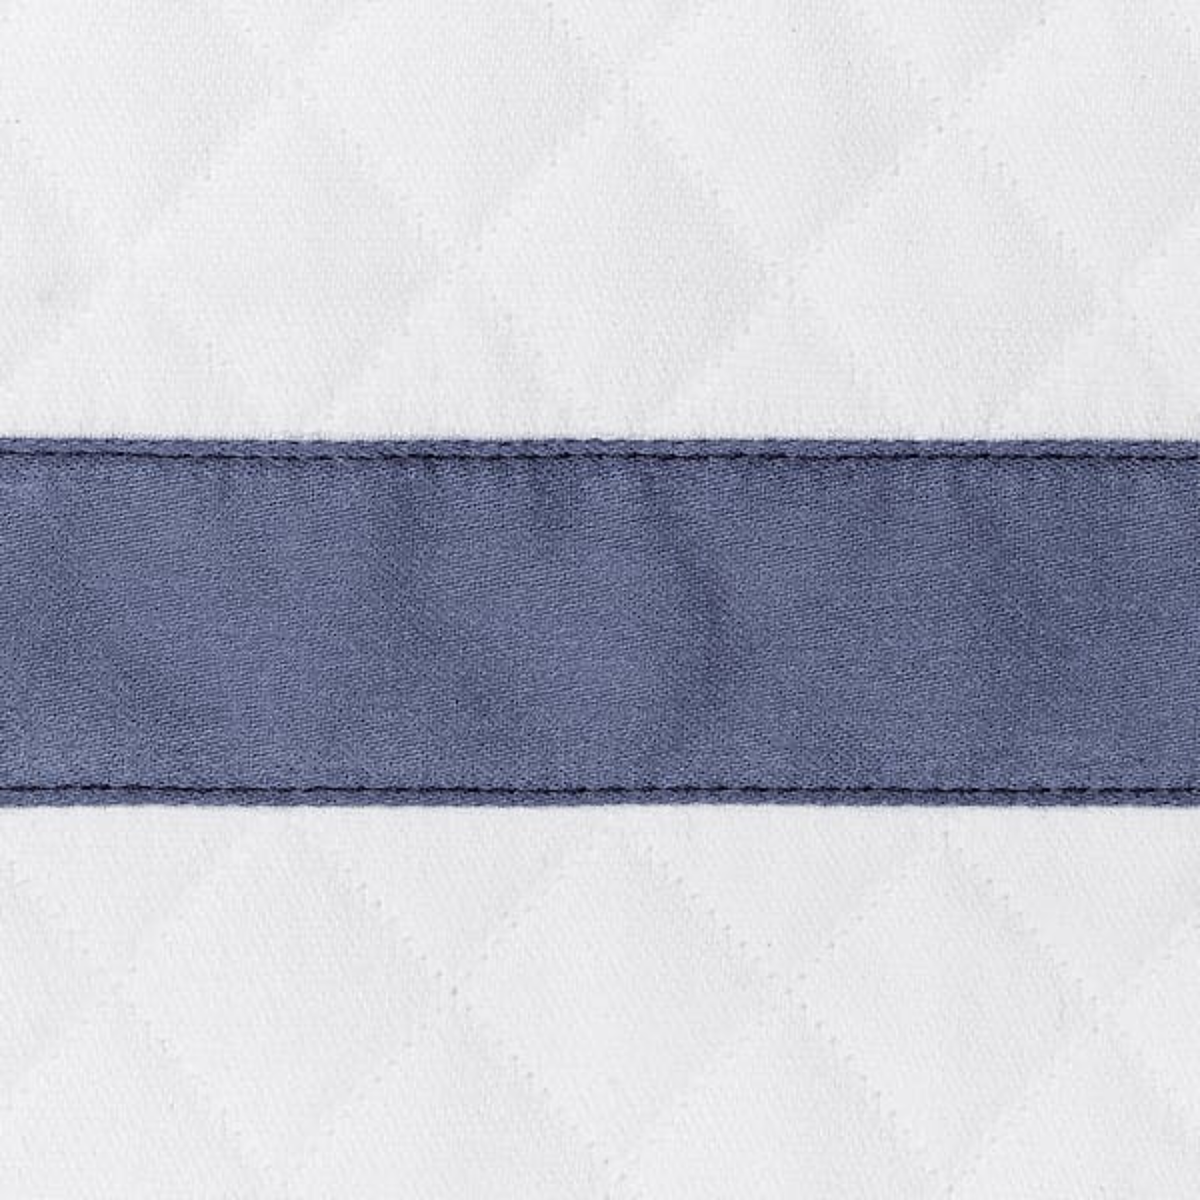 Swatch Sample of Steel Blue Matouk Lowell Matelassé Bedding